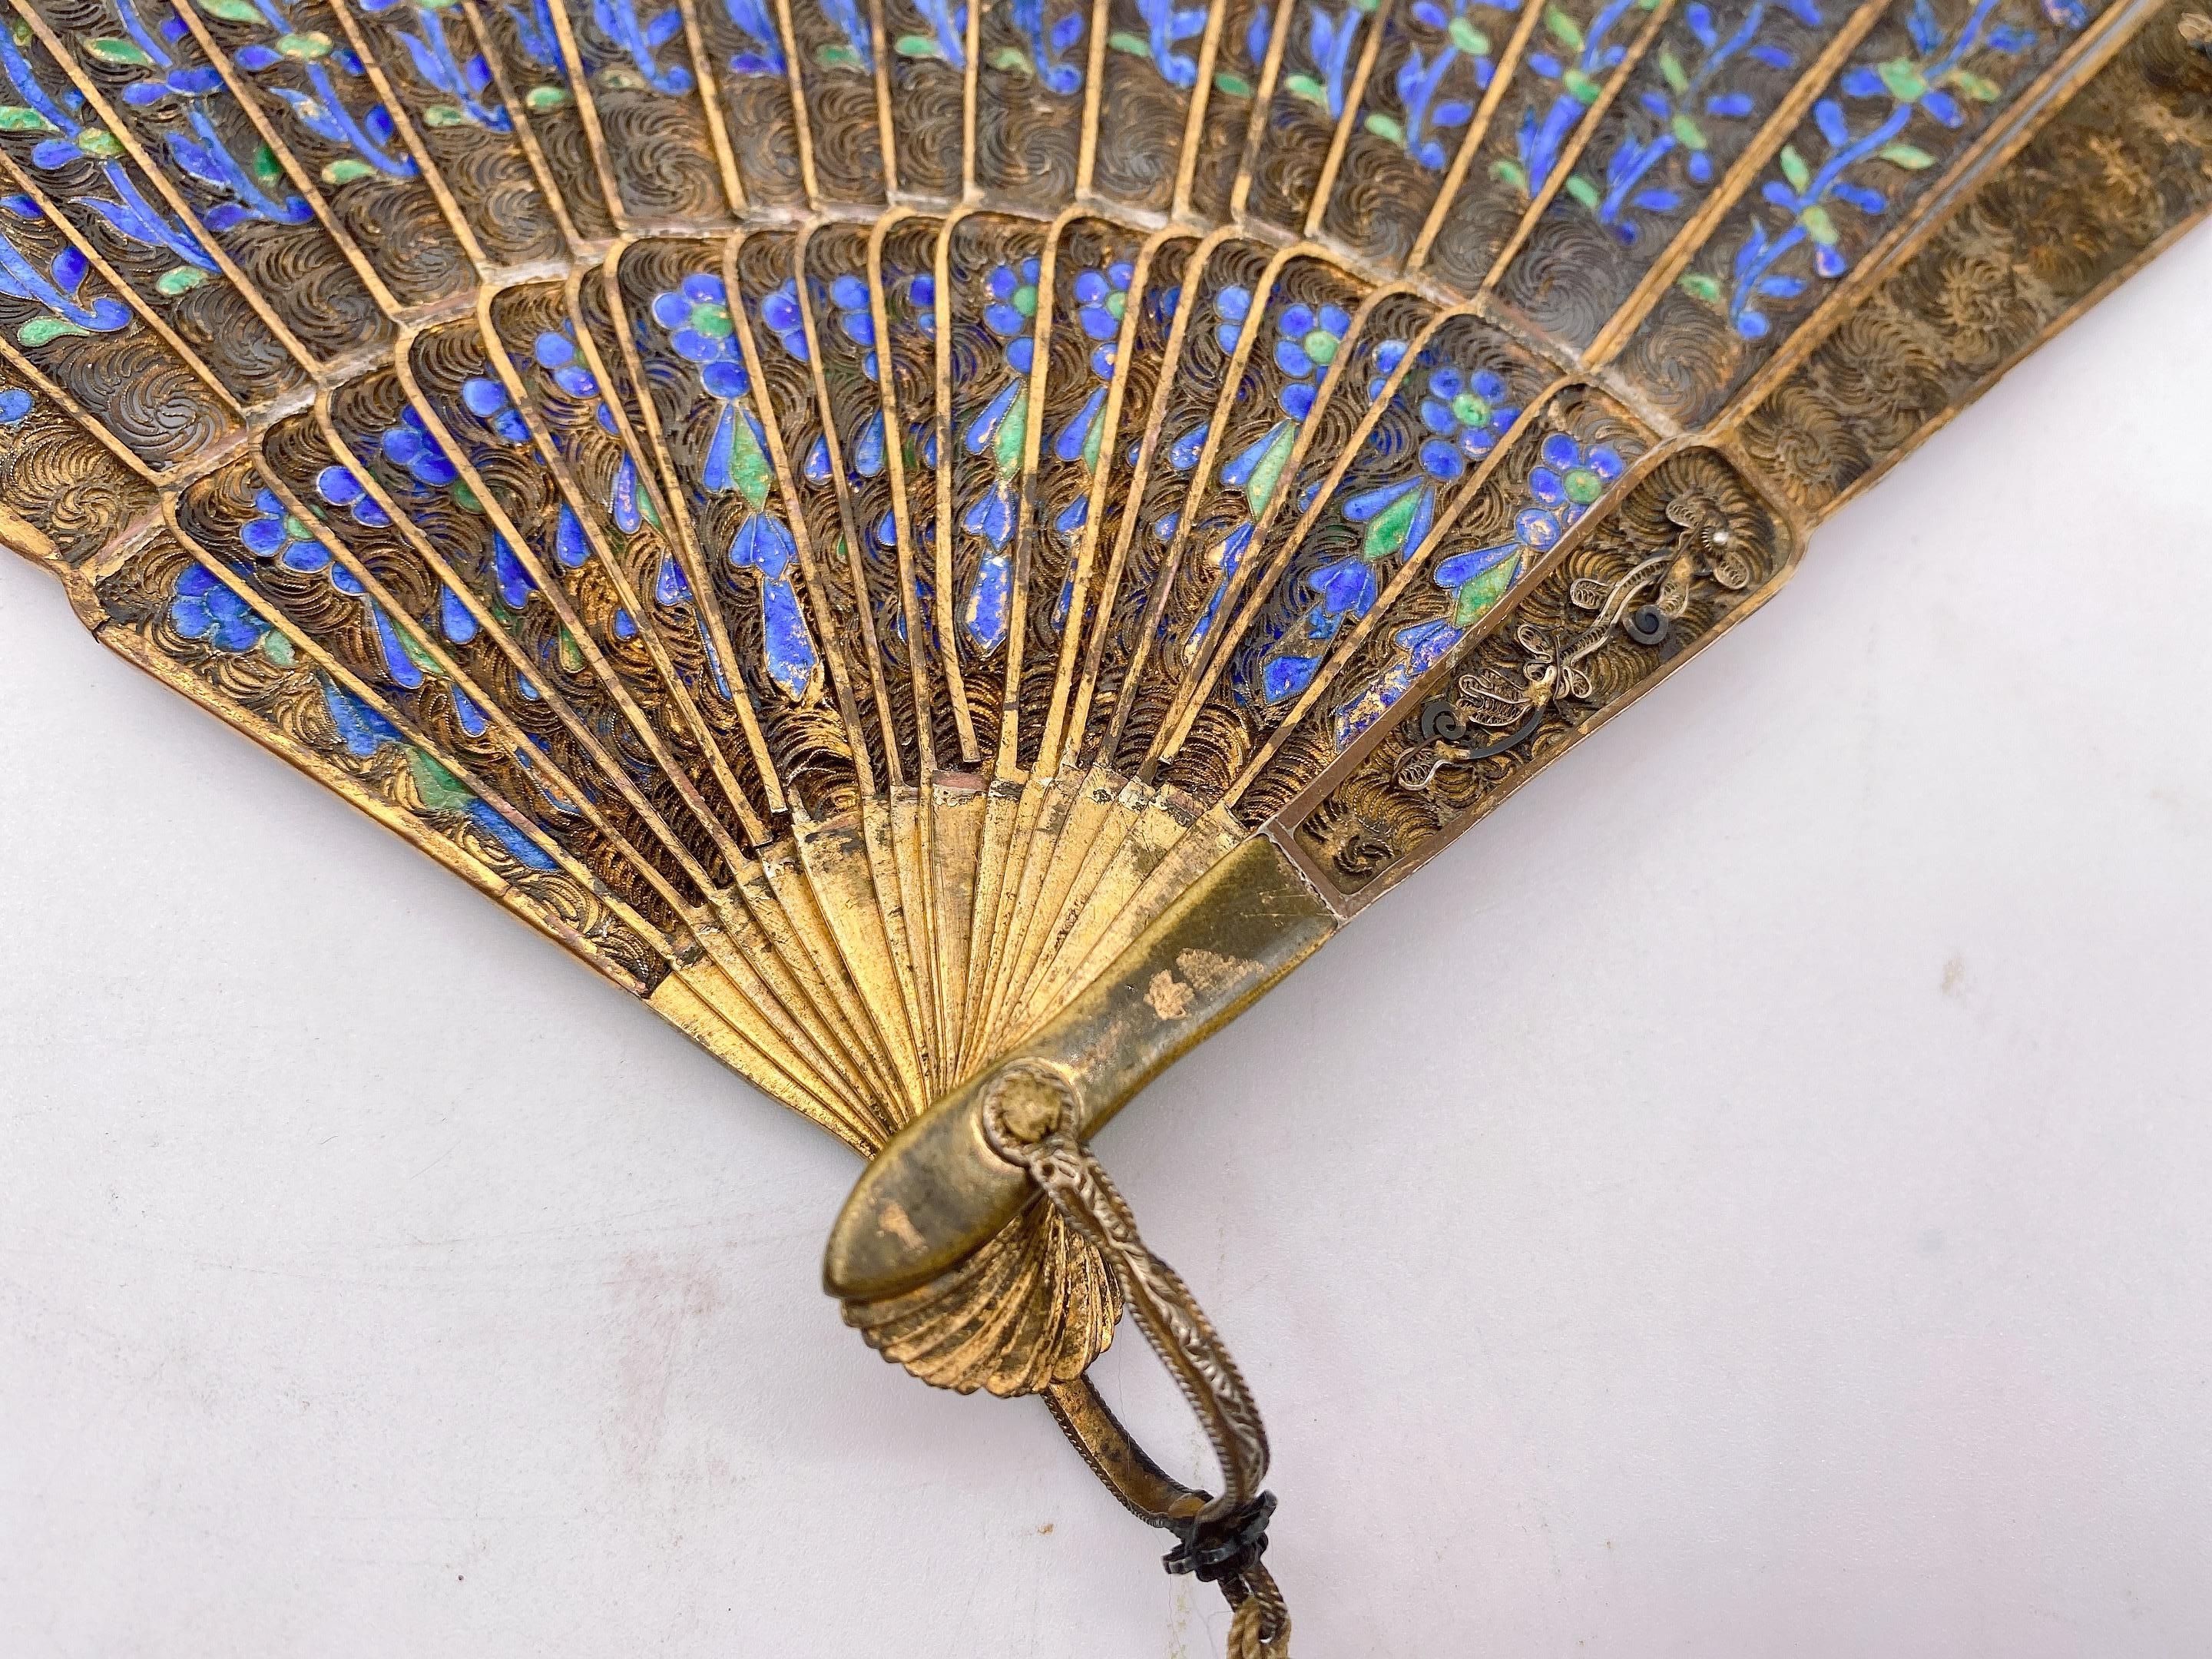 Rare Unique 17th Century Chinese Gilt Silver Filigree and Enamel Brise Fan For Sale 2